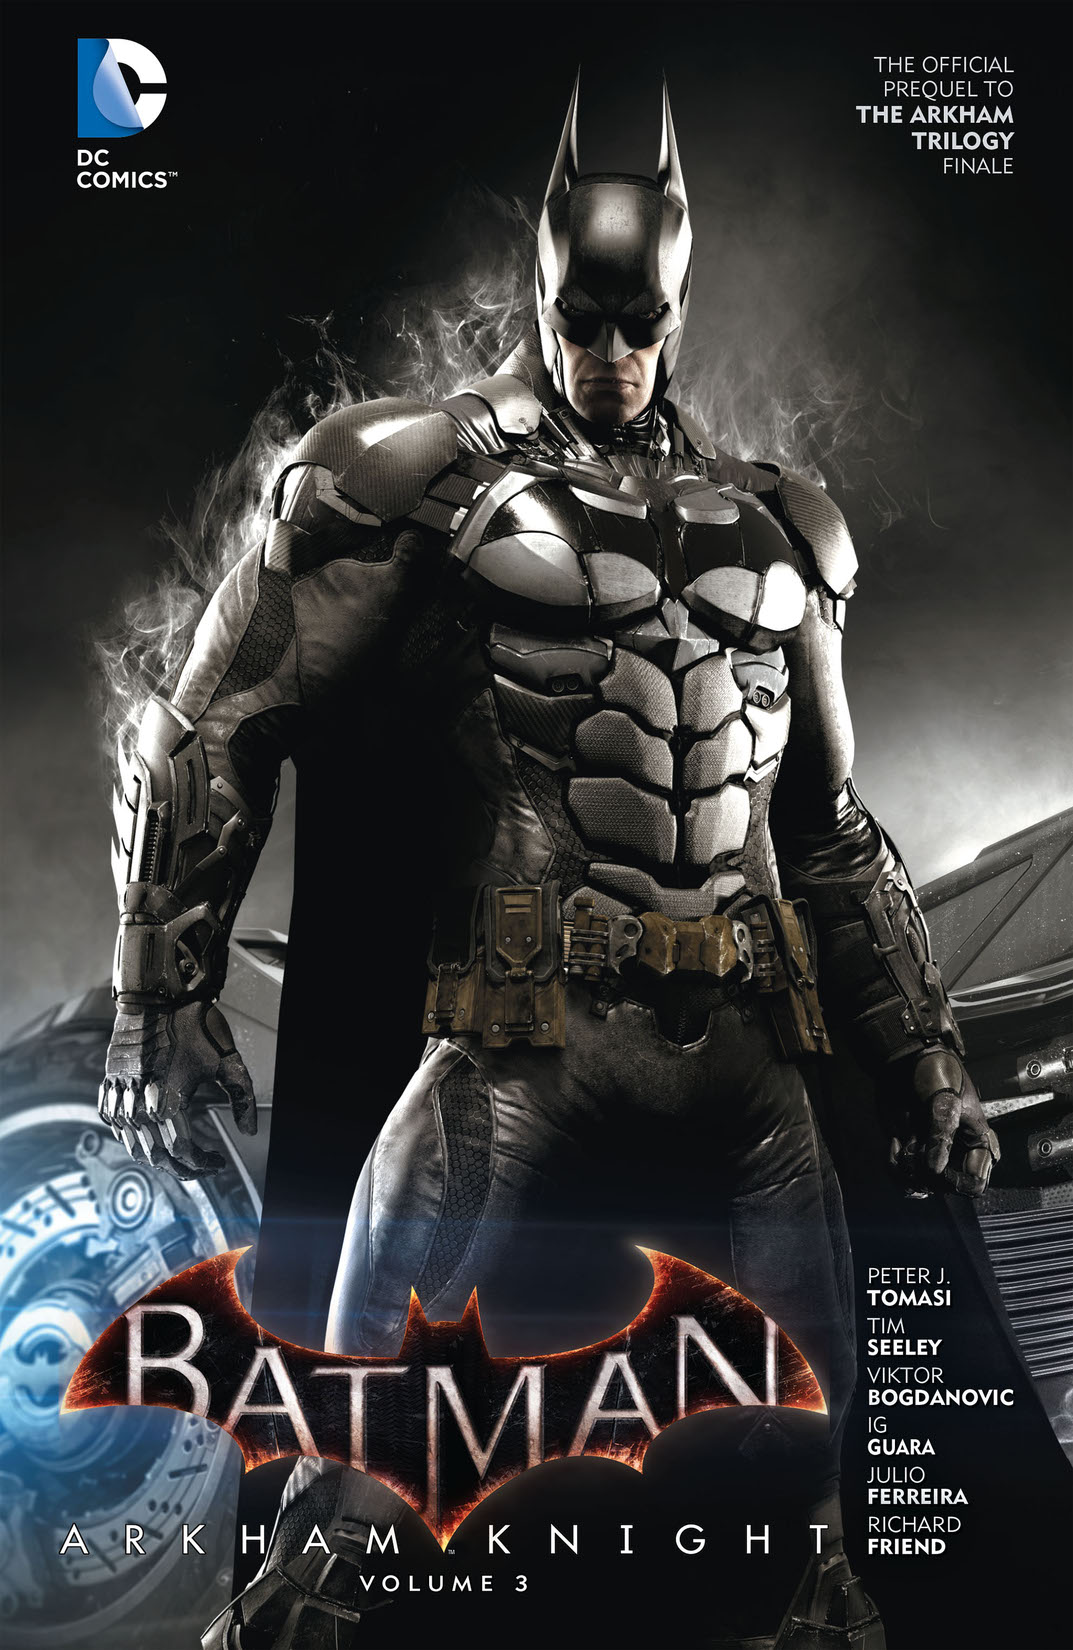 Batman: Arkham Knight Vol. 3 preview images